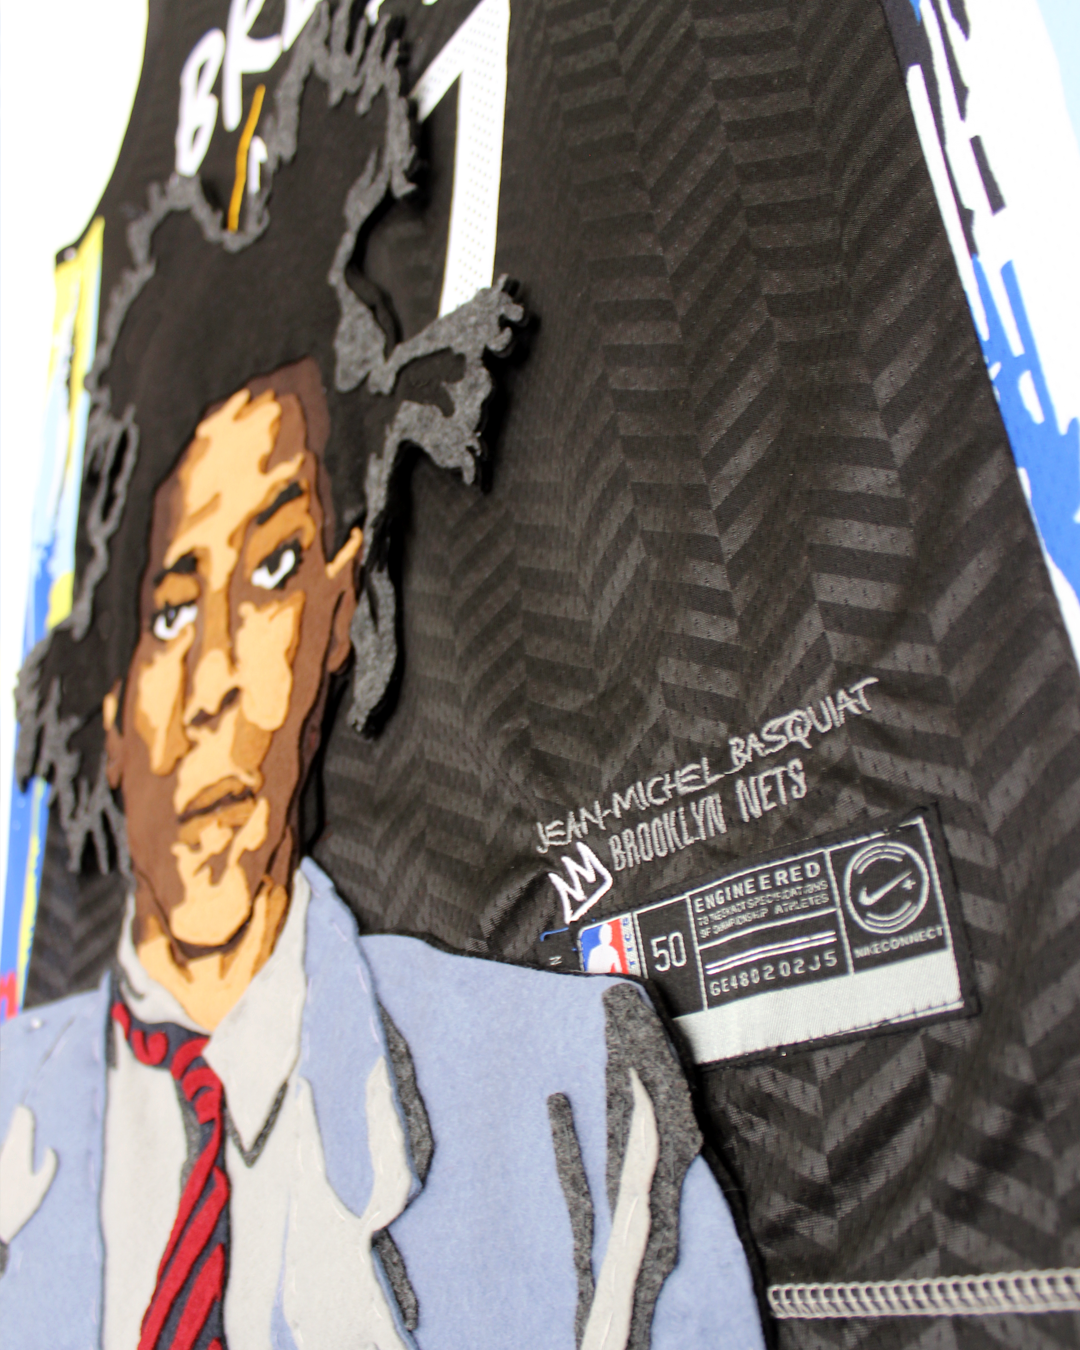 Jean-Michel-Basquiat-brooklyn-nets-kevin-durant-jersey-3.png